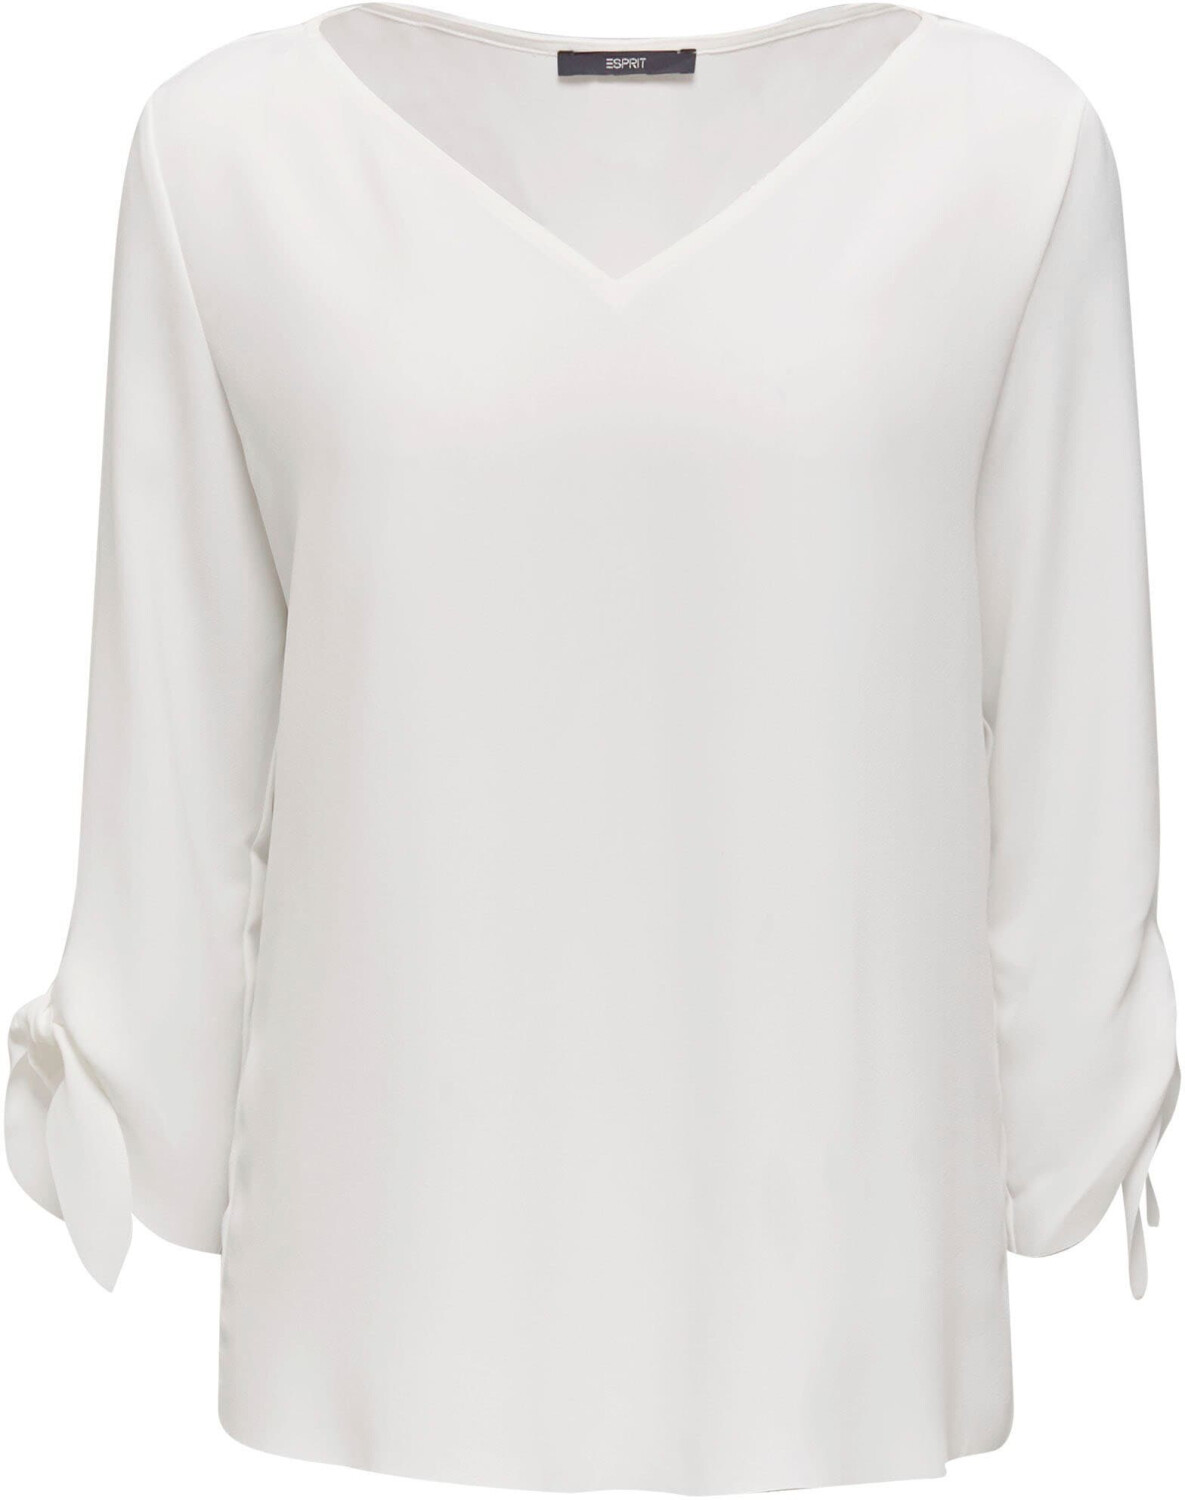 Esprit Stretch blouse with open edges (990EO1F305) ab 14,99 € |  Preisvergleich bei